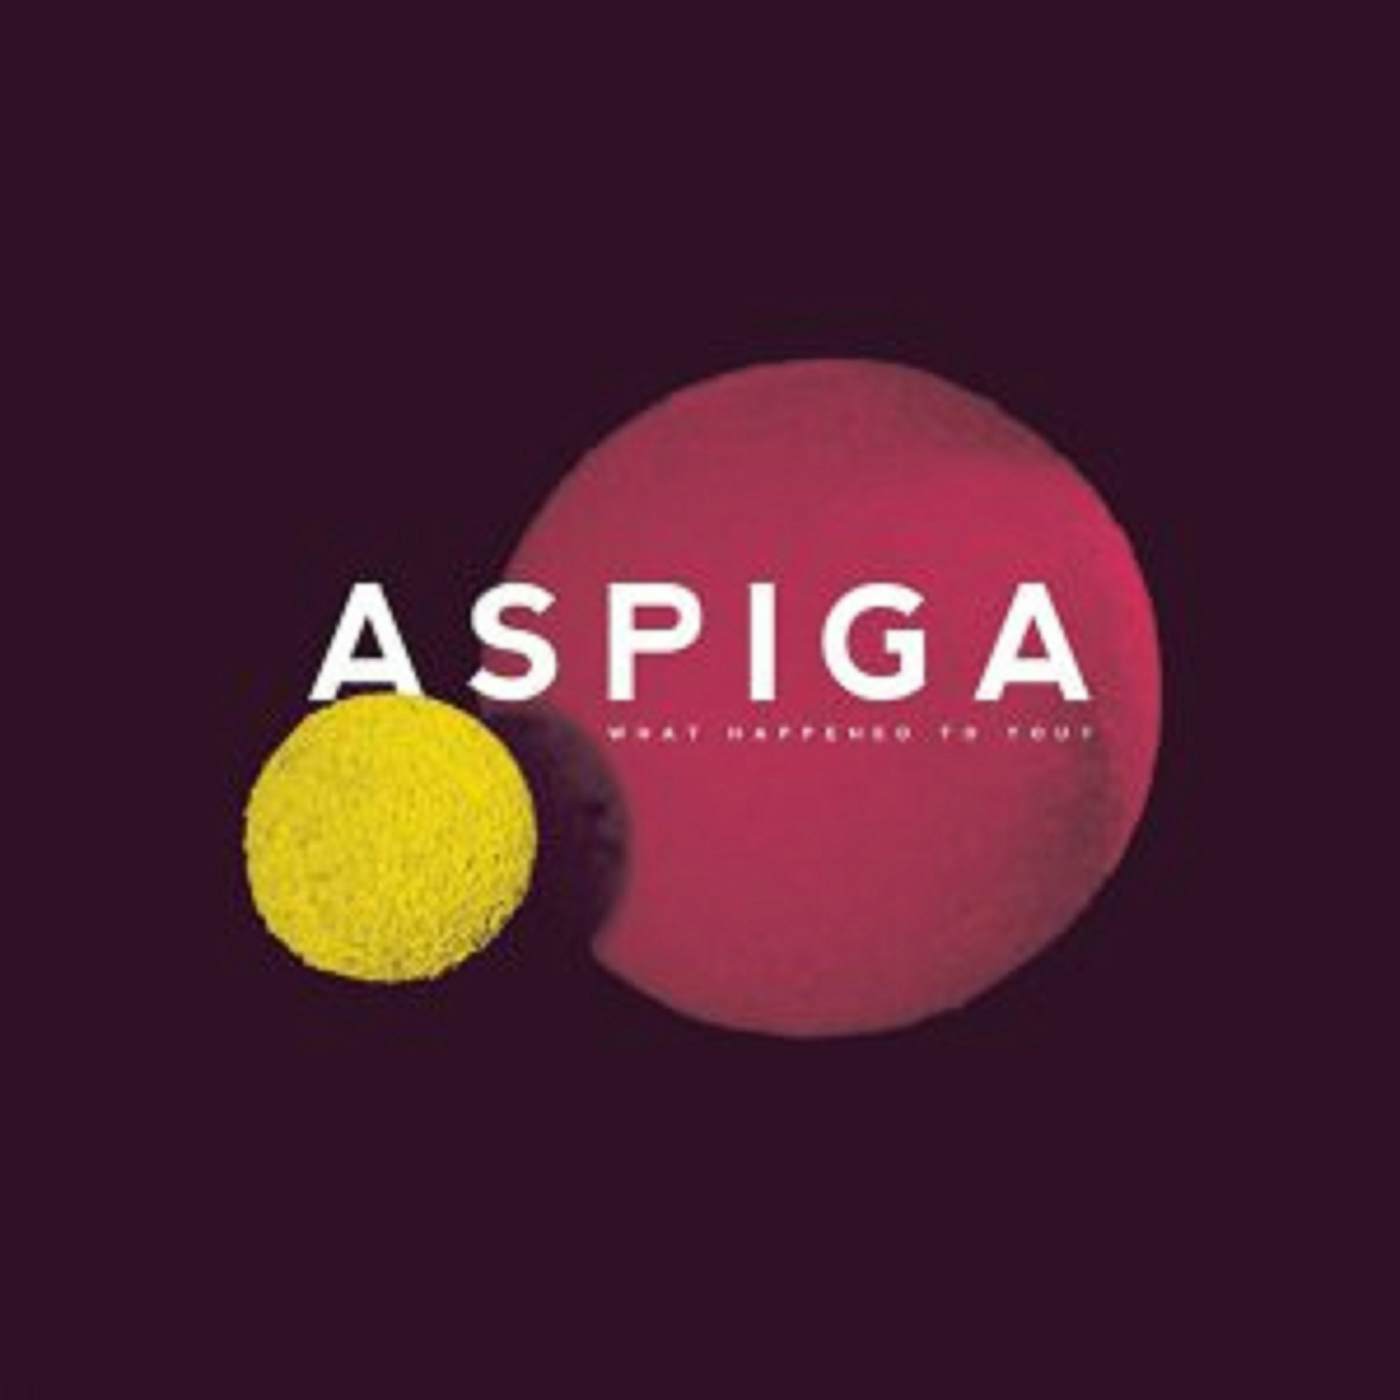 Aspiga WHAT HAPPENED TO YOU Vinyl Record